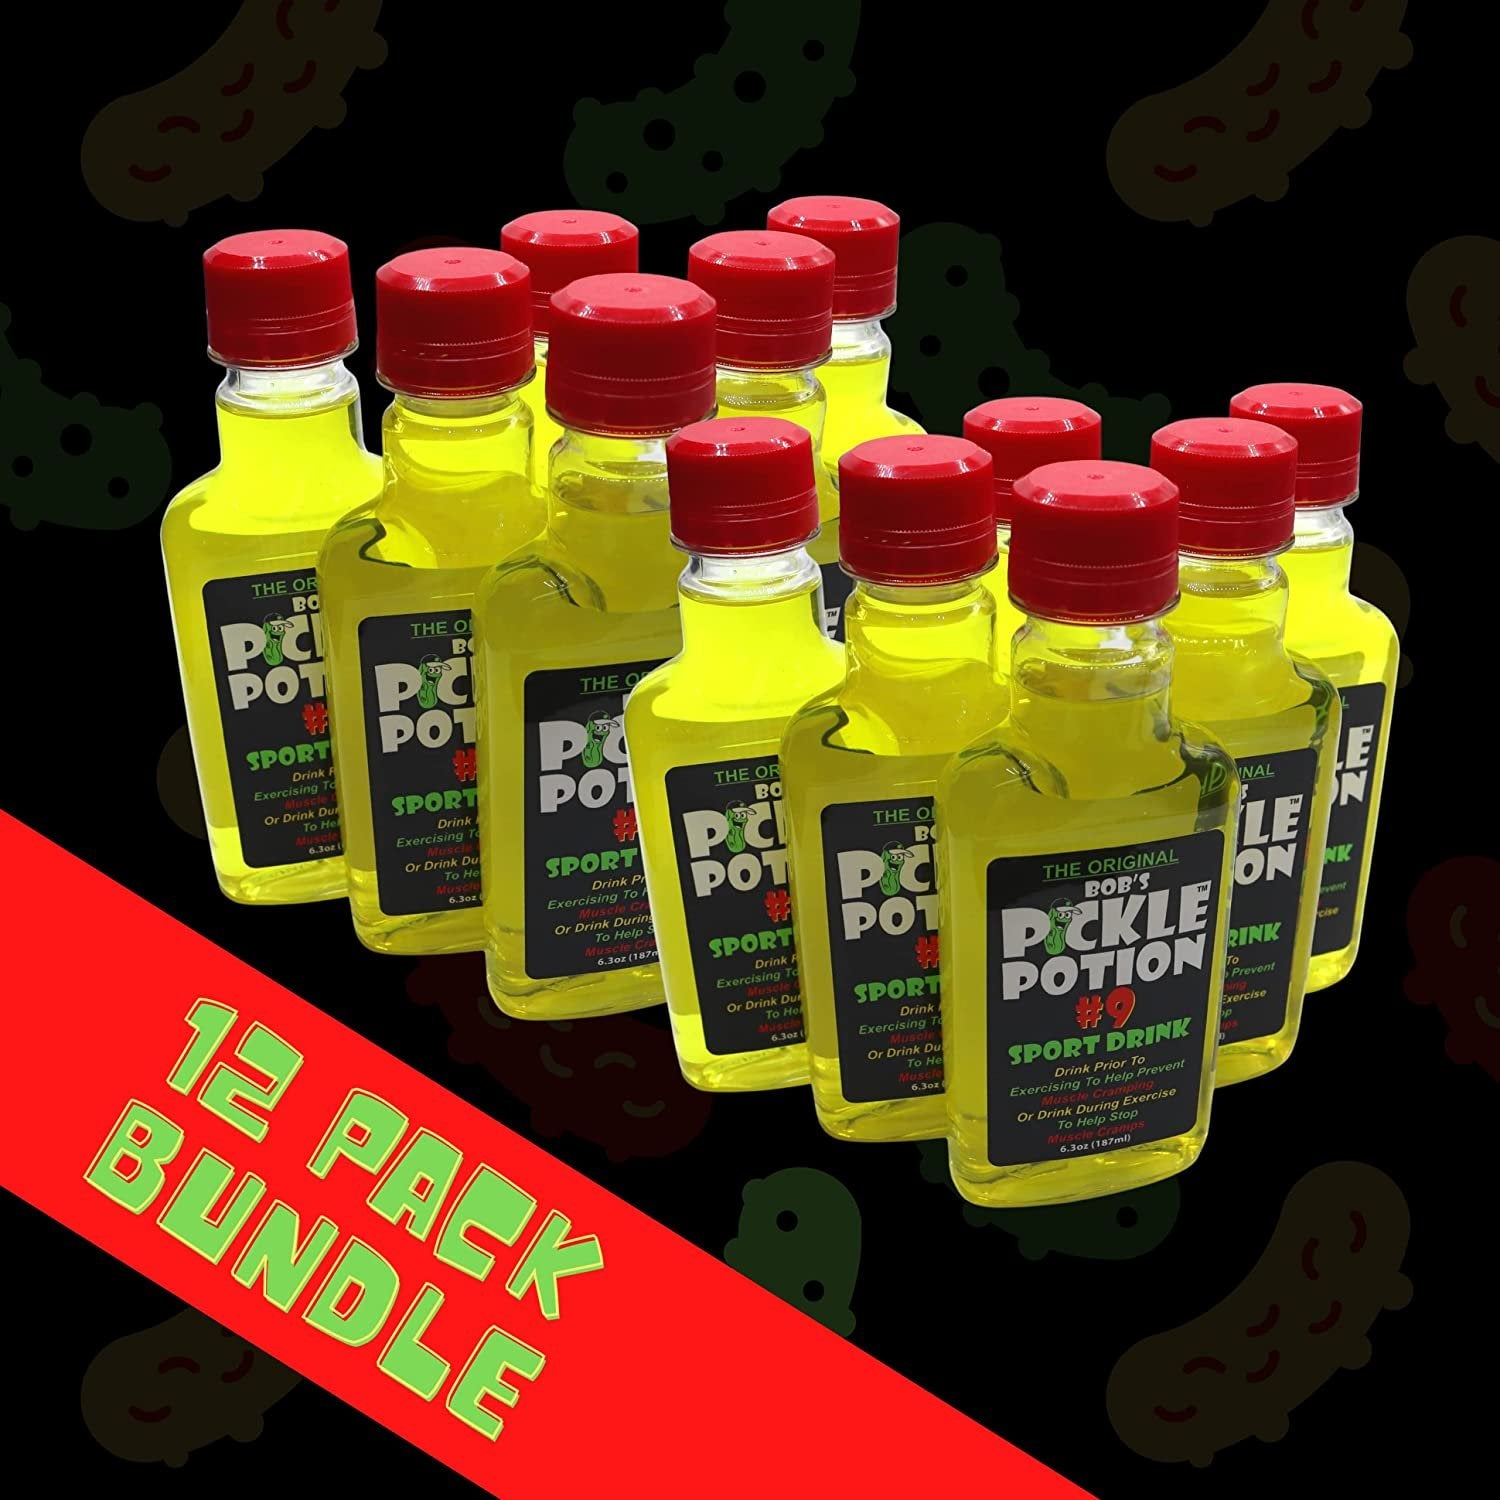 Bob's Pickle Potion #9 Sport Drink - 6.3 Oz 187ml - 12 Pack of Pickle Juice Bottles - Sports Drink for Post or Pre Workout - Muscle Cramp Support Pickle Juice Drink